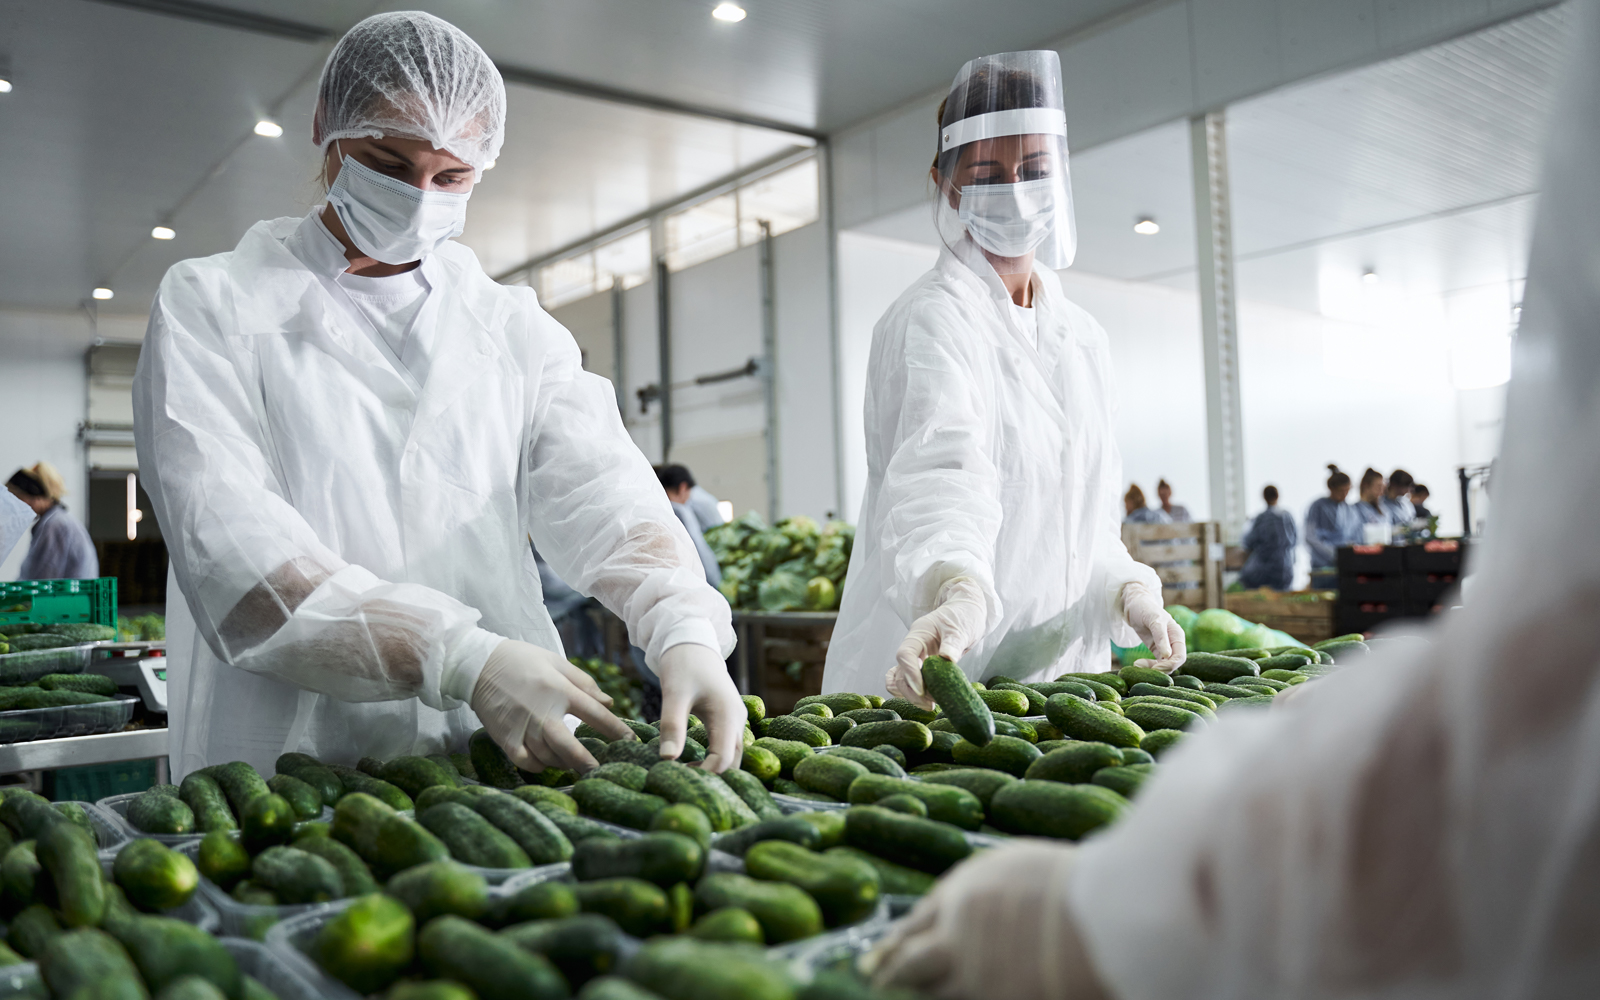 Food processing workers sorting cucumbers on a conveyor belt